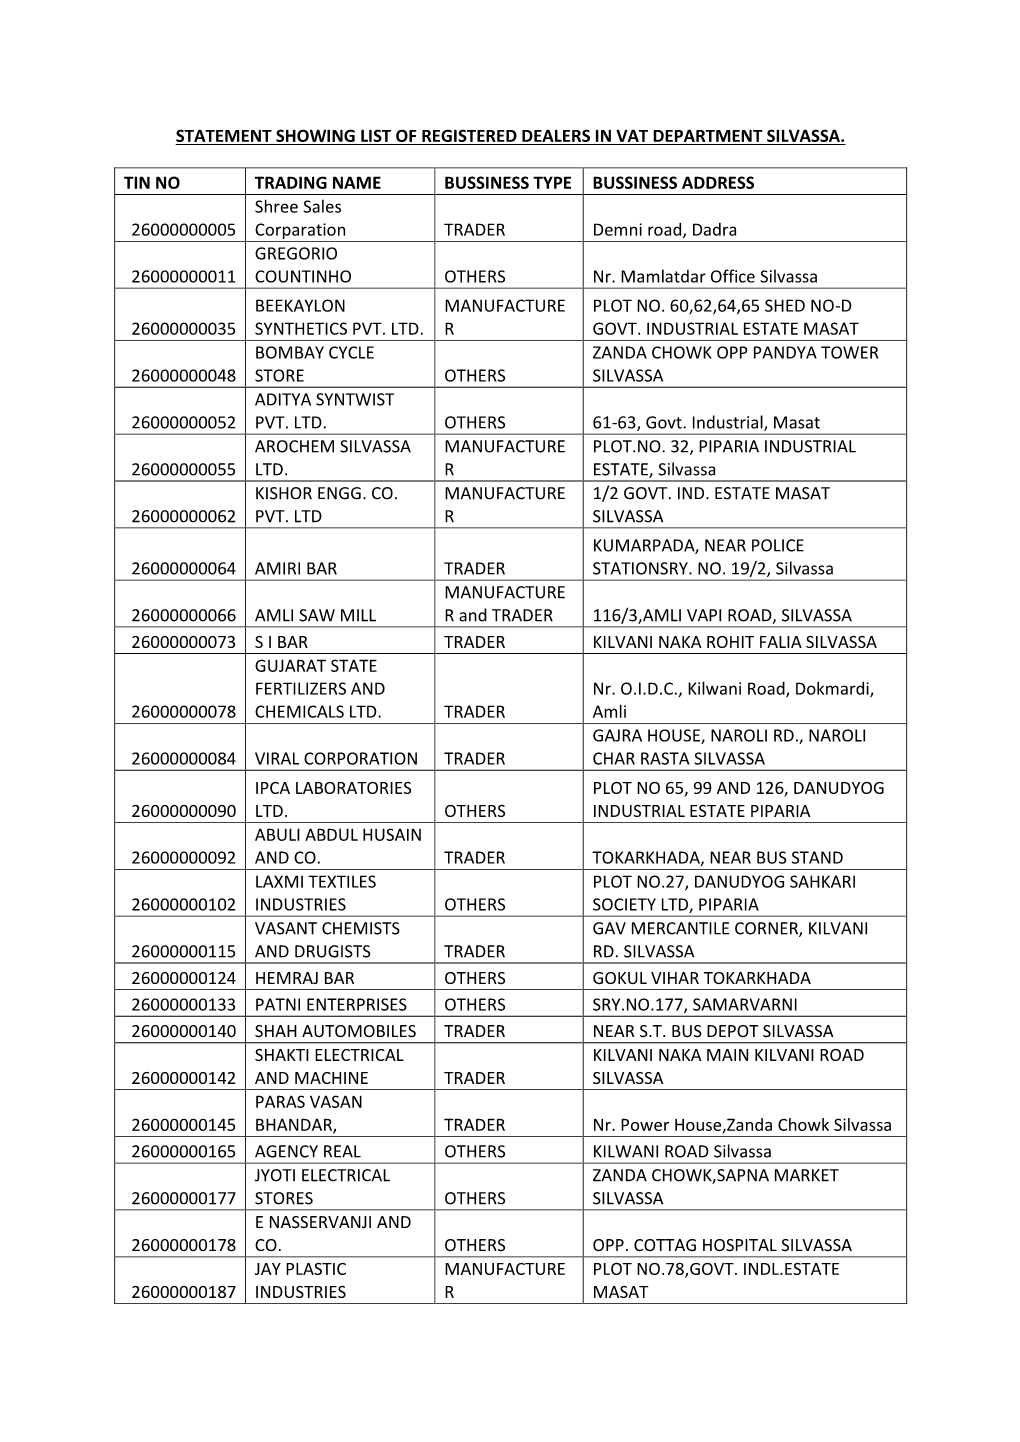 List of Registered Dealers in Vat Department Silvassa